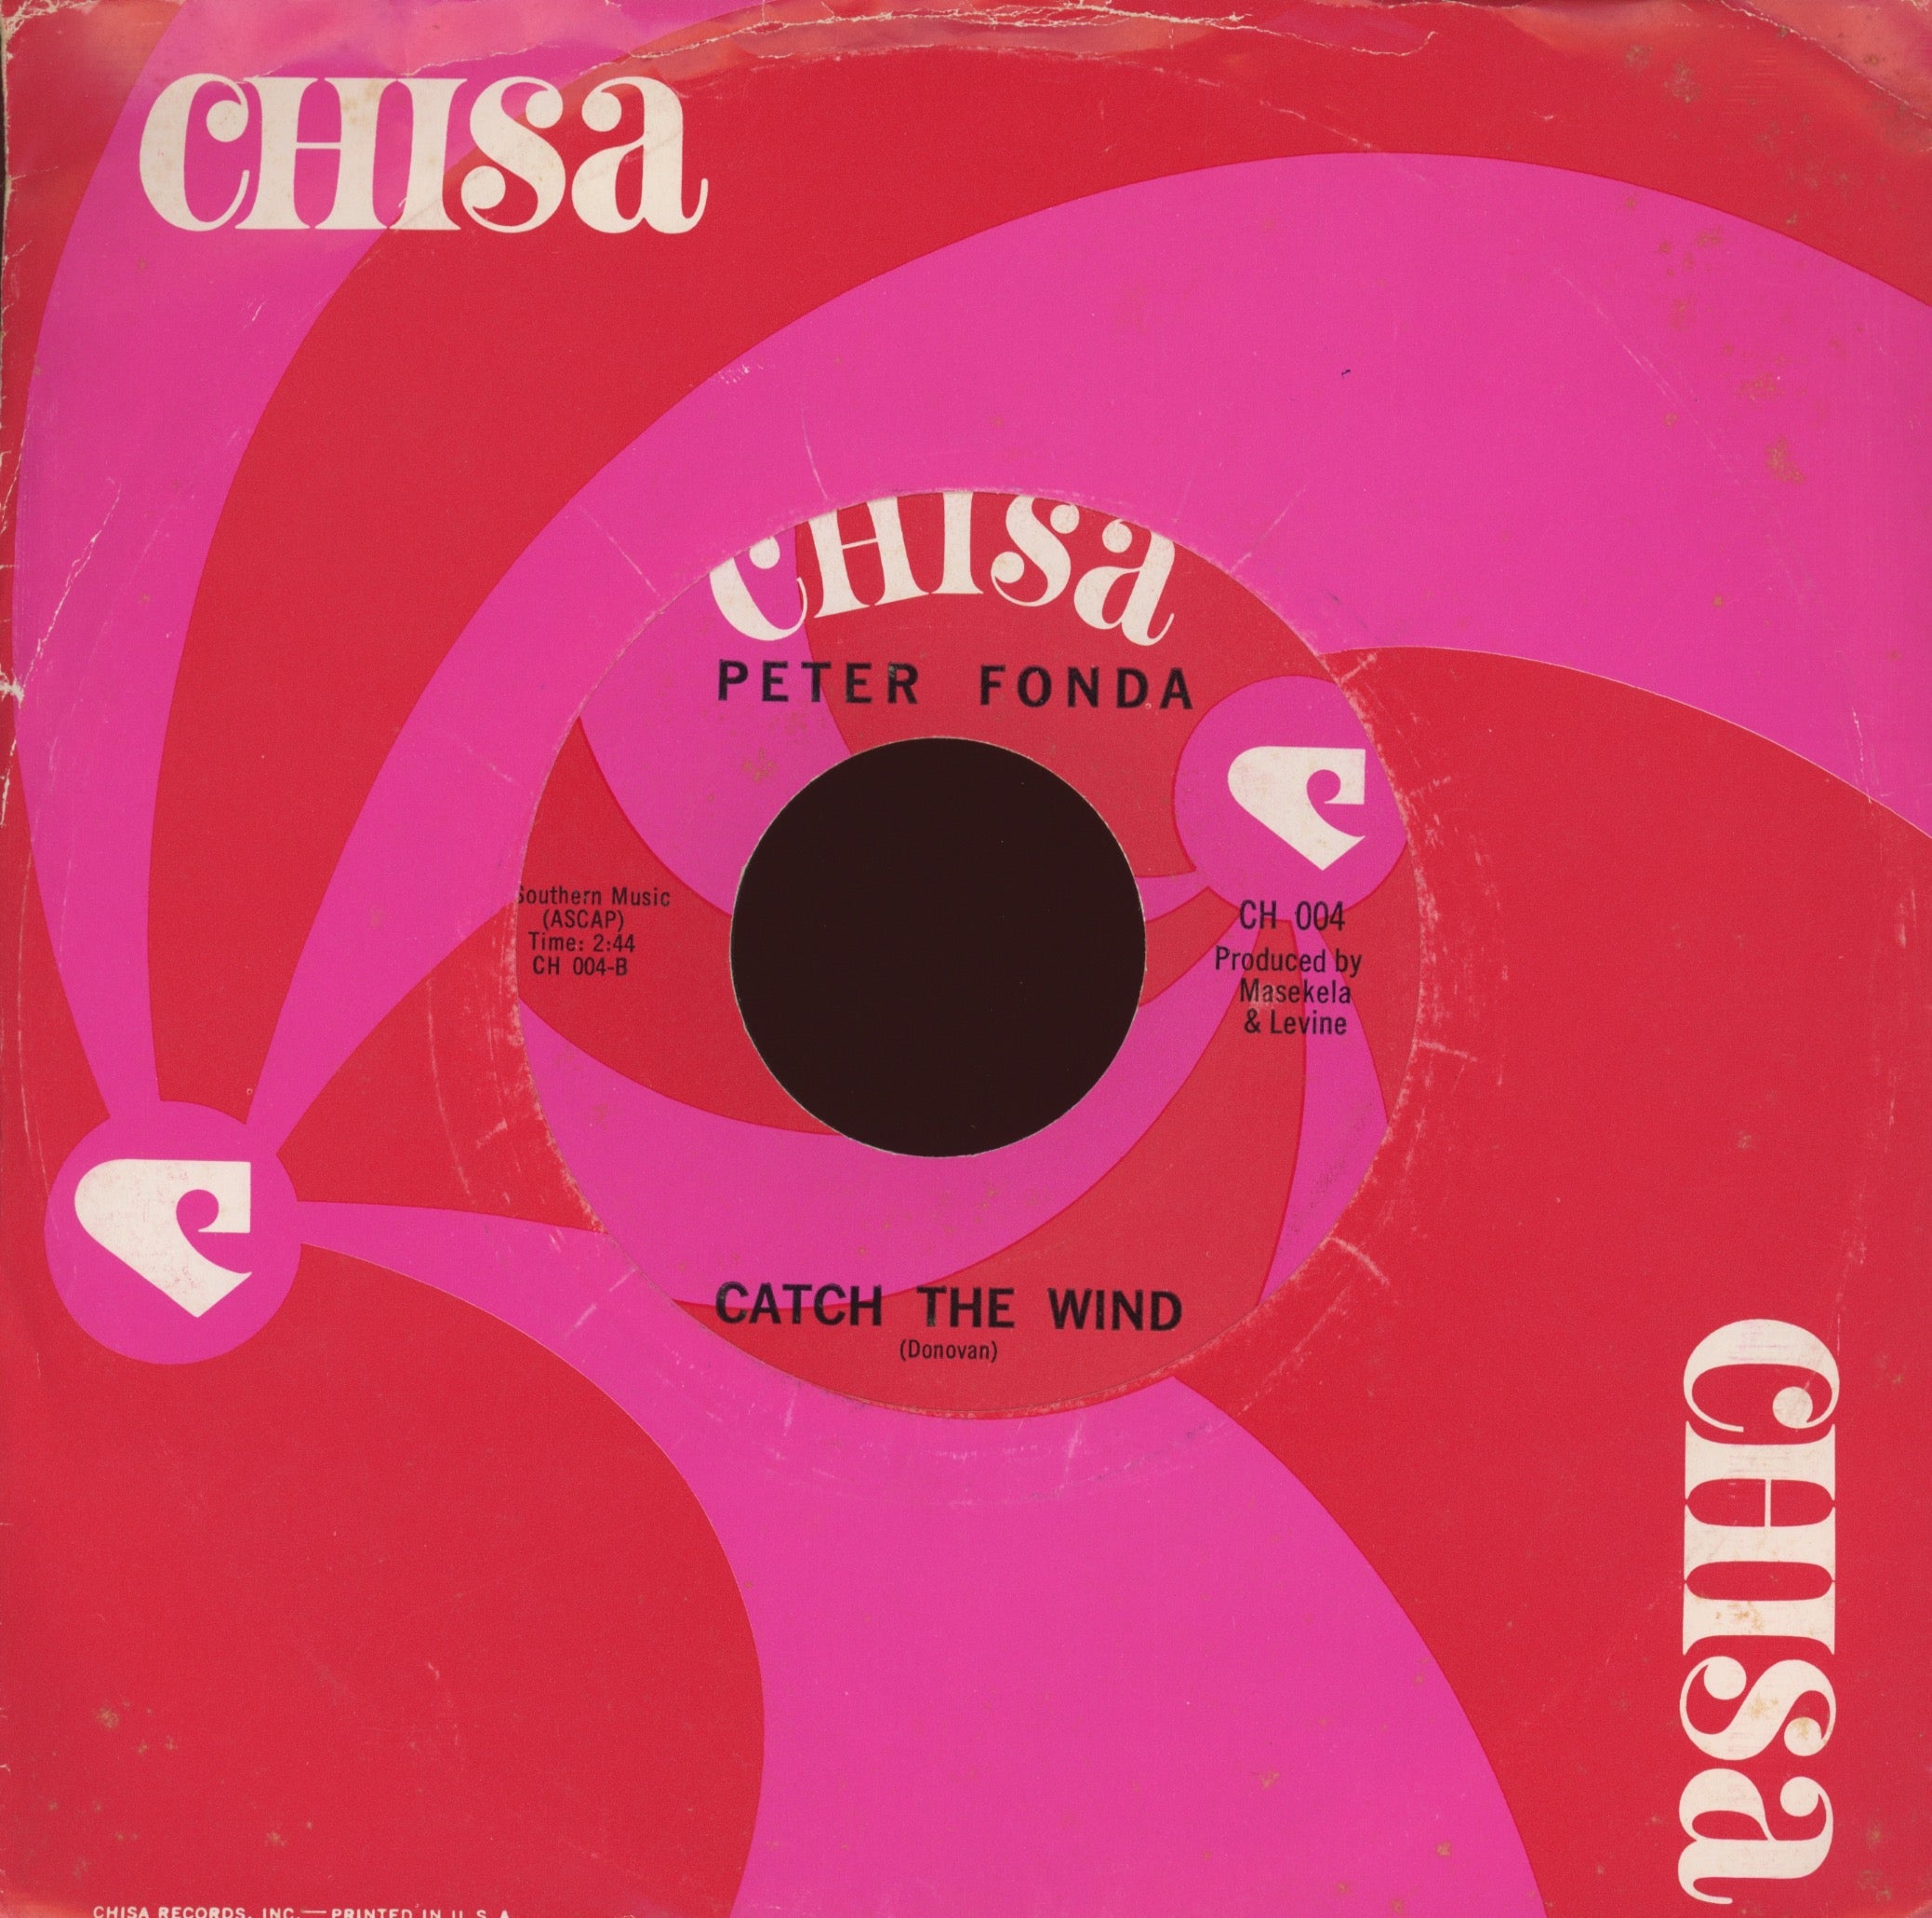 Peter Fonda - November Night on Chisa Rock 45 Gram Parsons